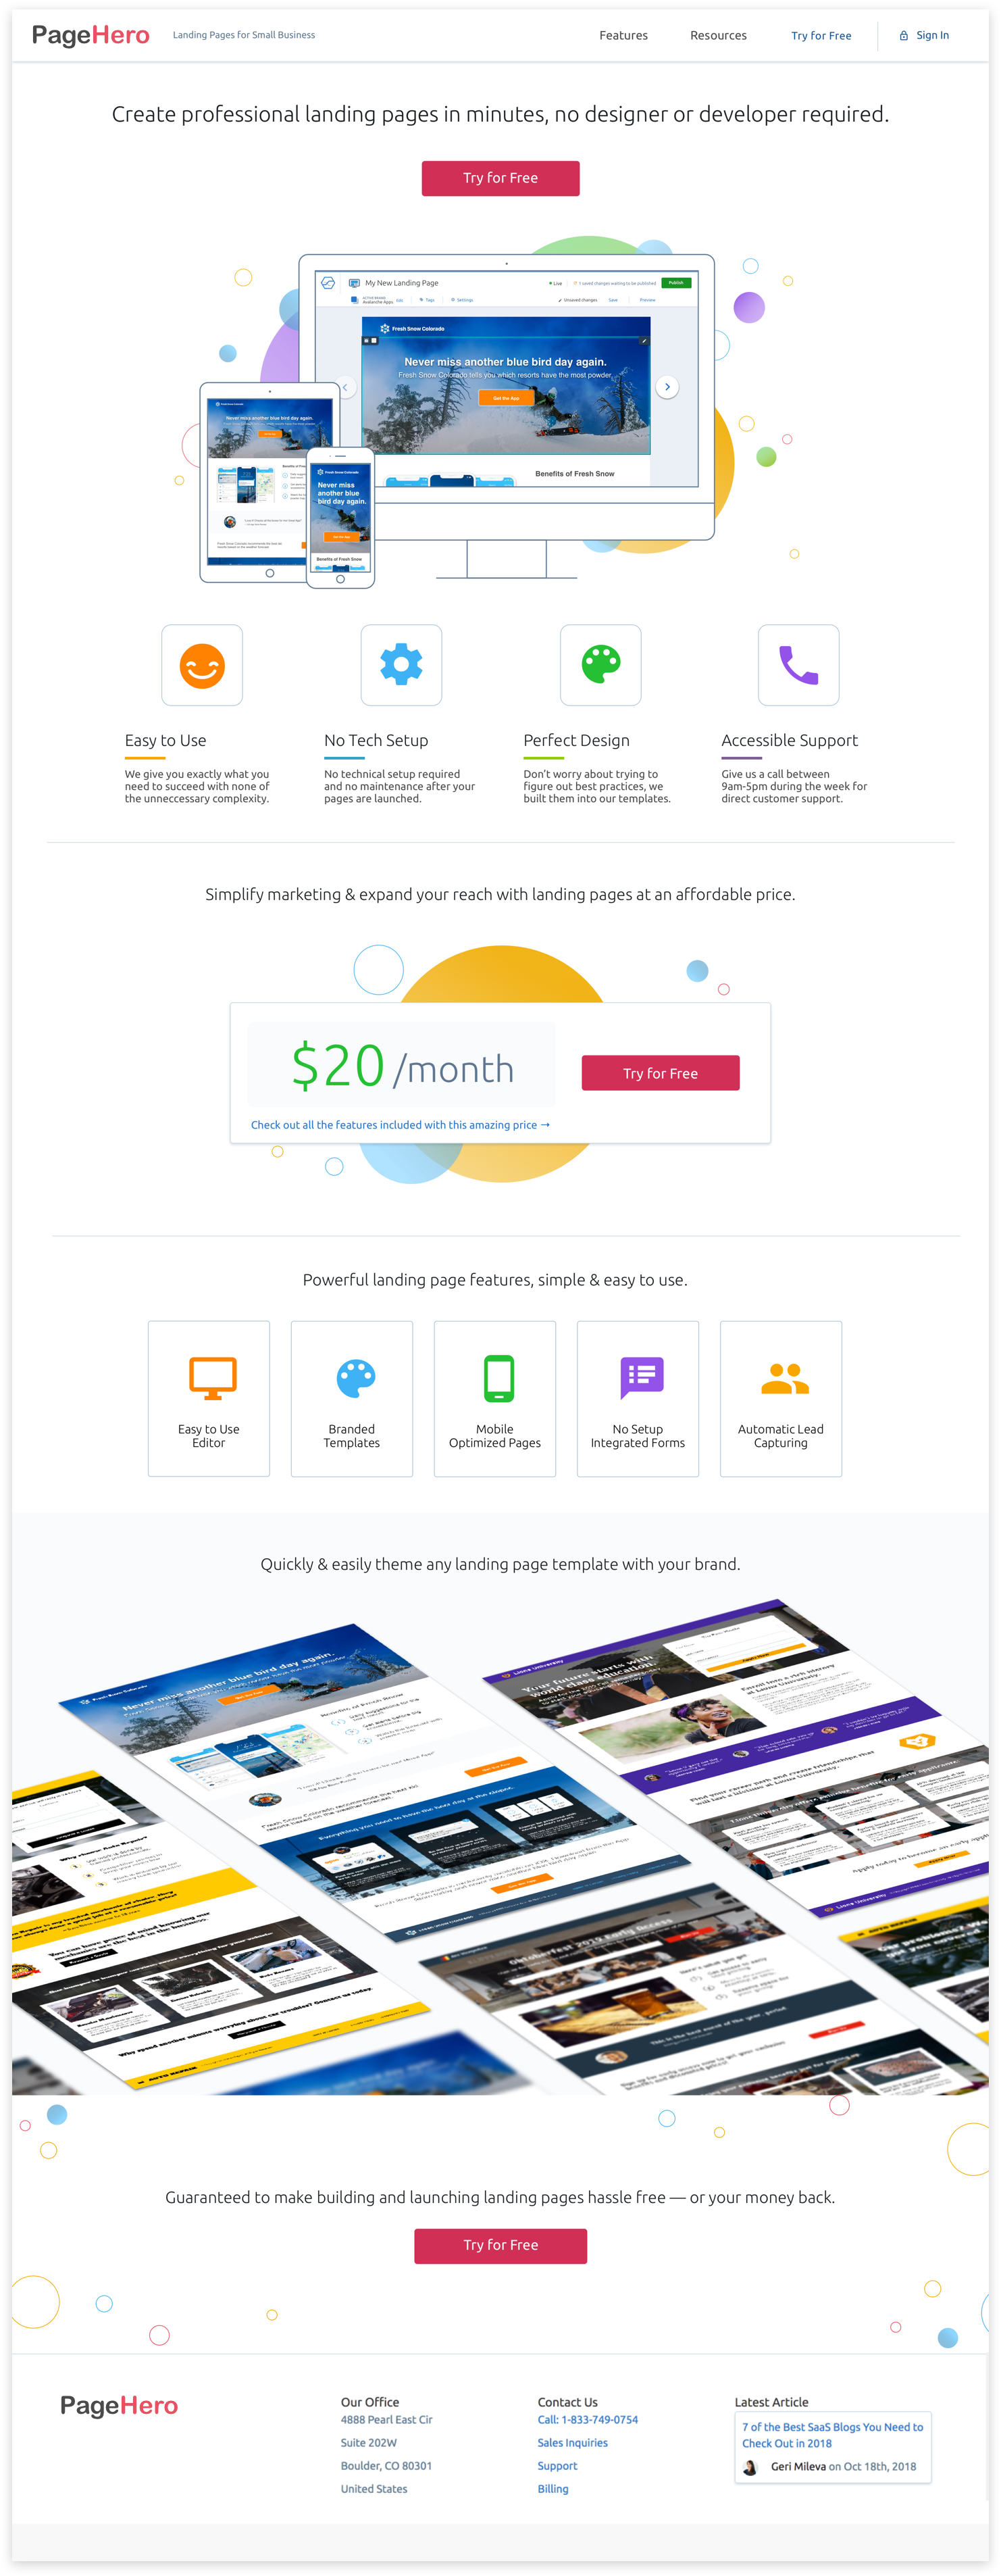 PageHero marketing website snapshot